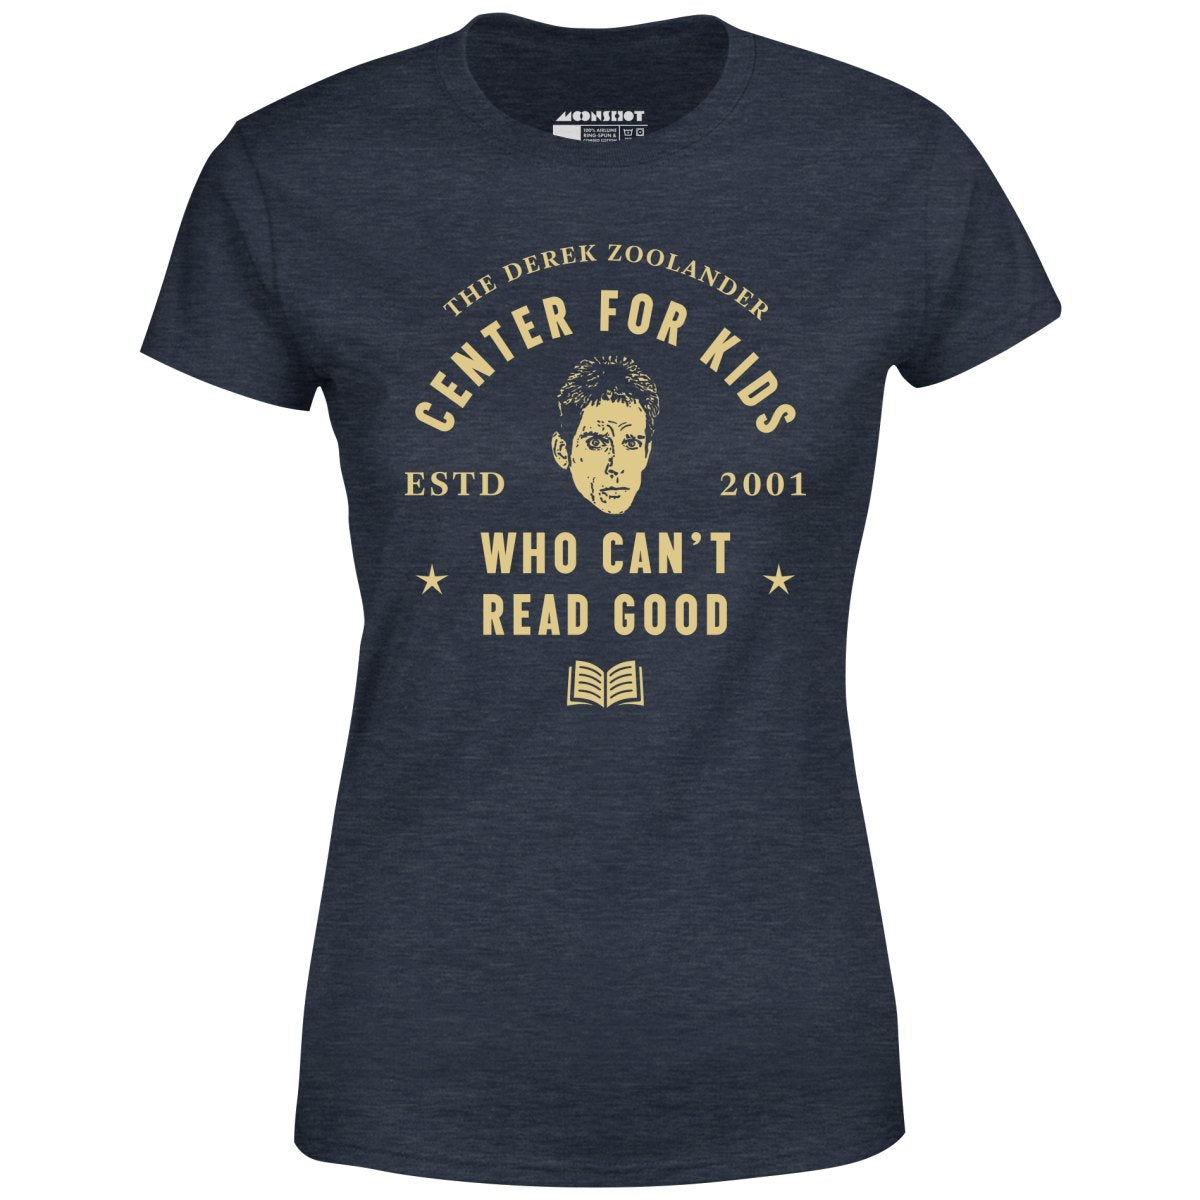 Derek Zoolander Center for Kids Who Can't Read Good - Women's T-Shirt